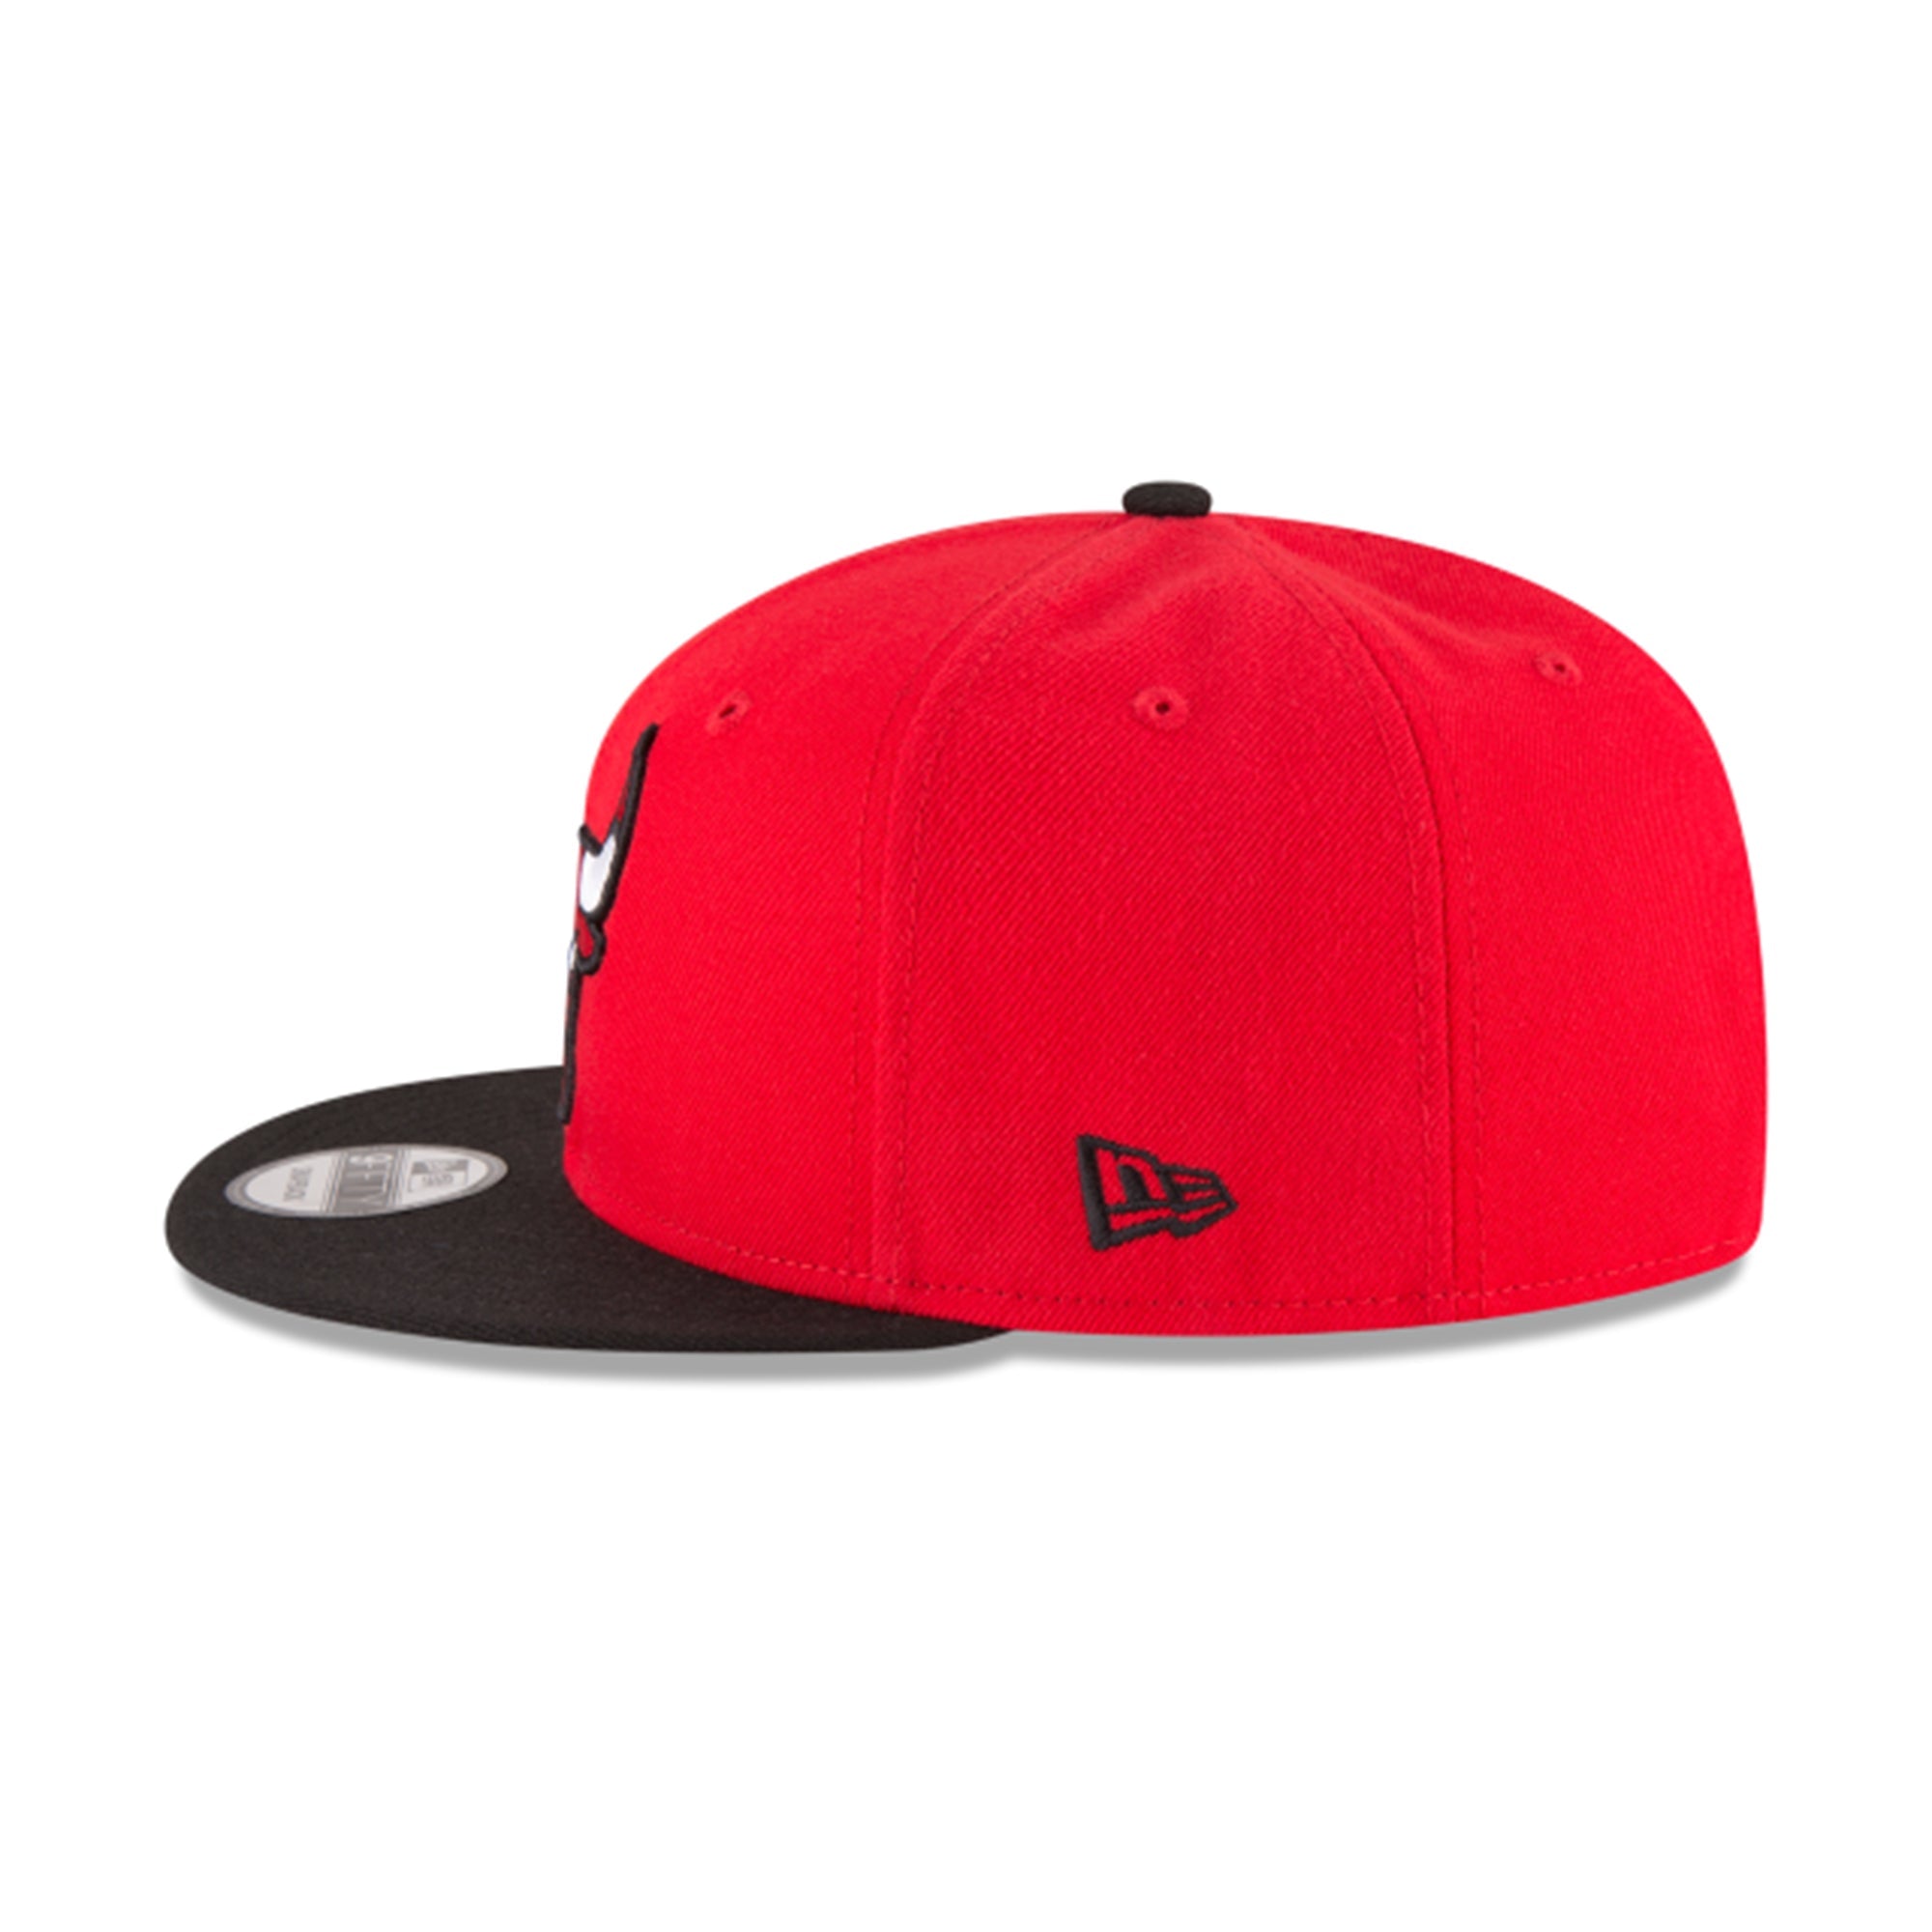 New Era Chicago Bulls Snapback Hat (Red Black)5